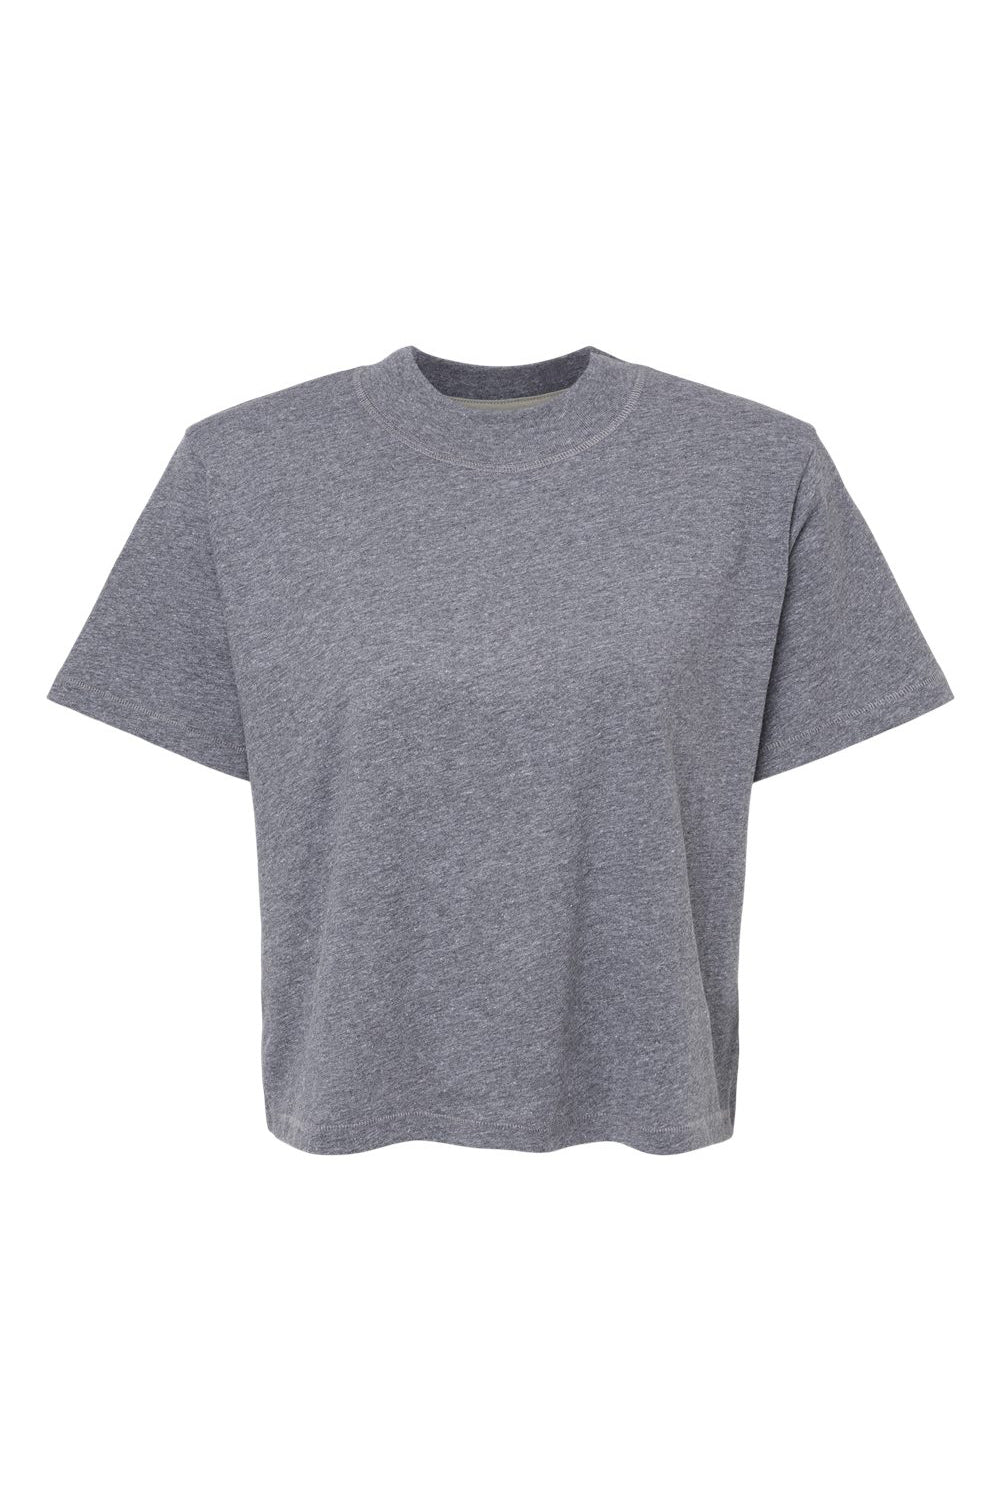 LAT 3518 Womens Boxy Short Sleeve Crewneck T-Shirt Heather Granite Grey Flat Front